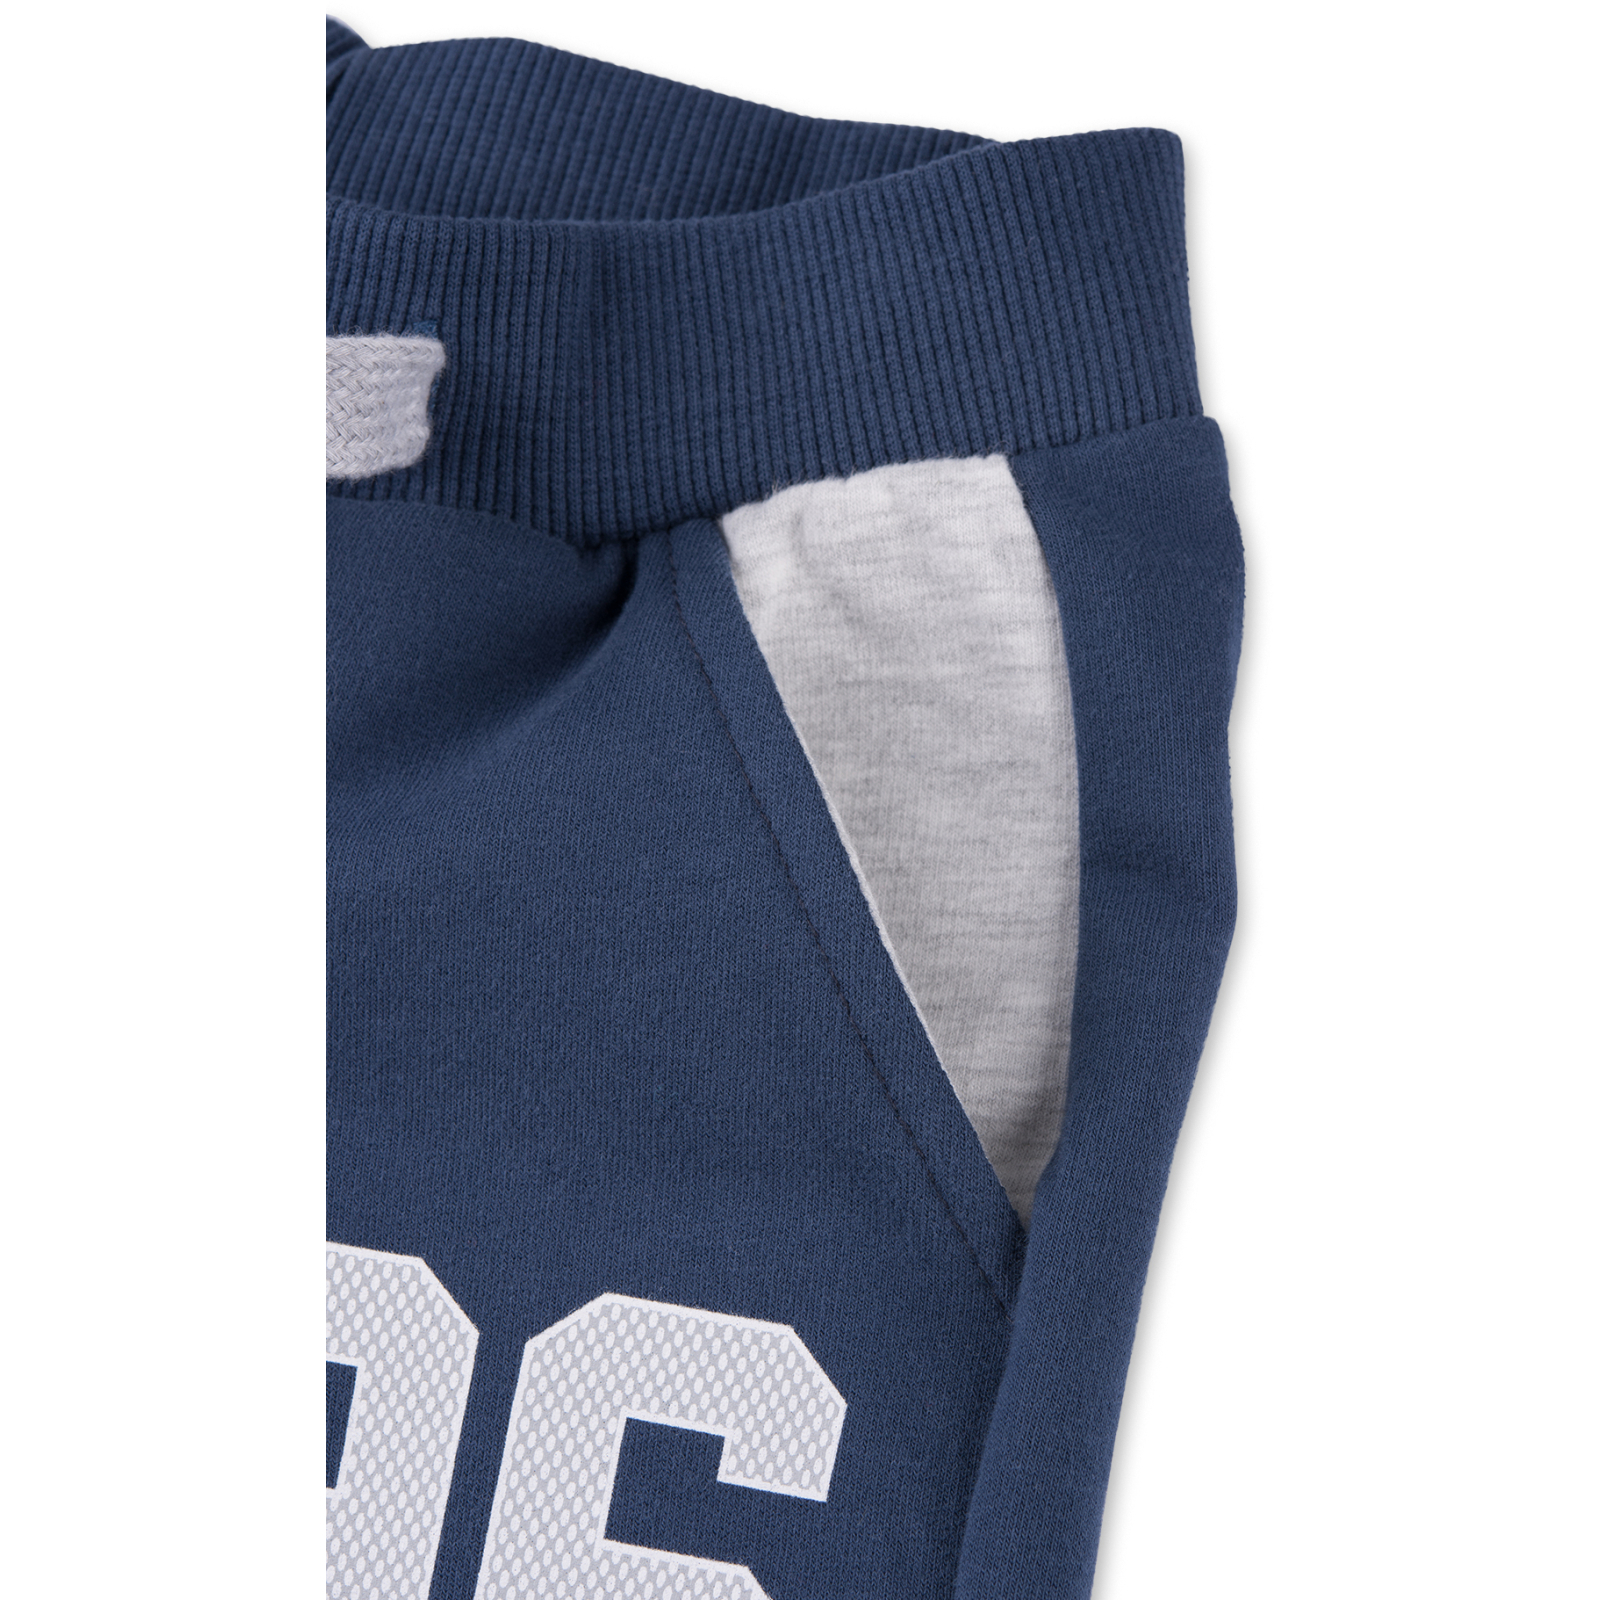 Спортивный костюм Breeze серый меланж индиго "New York" (7938-98B-gray-blue) изображение 6